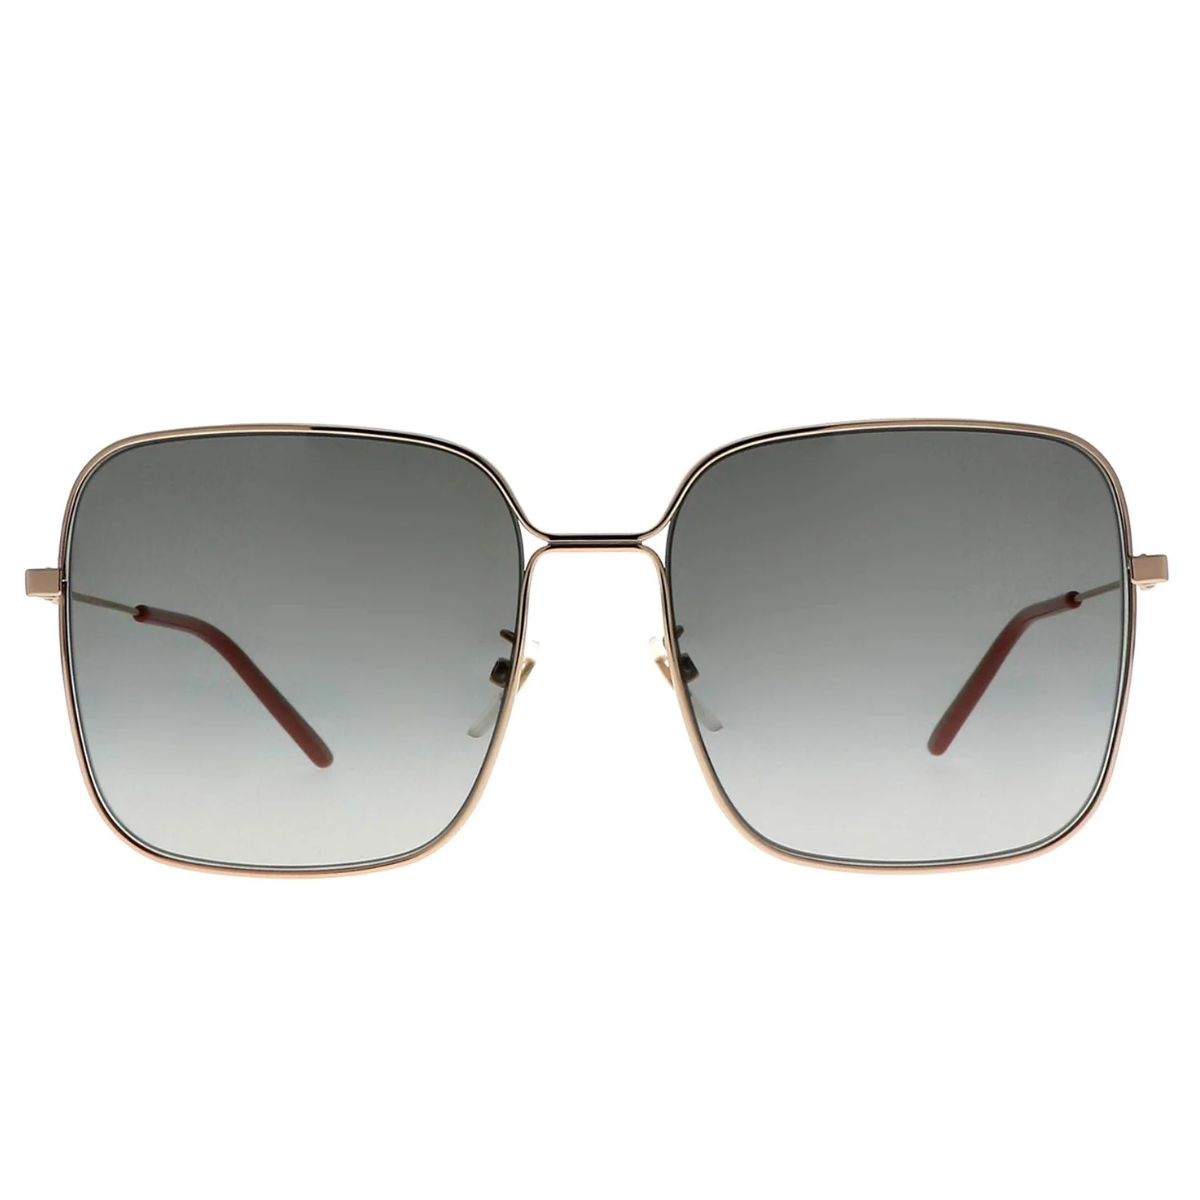 "Gucci Women's Sunglasses: Model 0443S for Elegant Style"